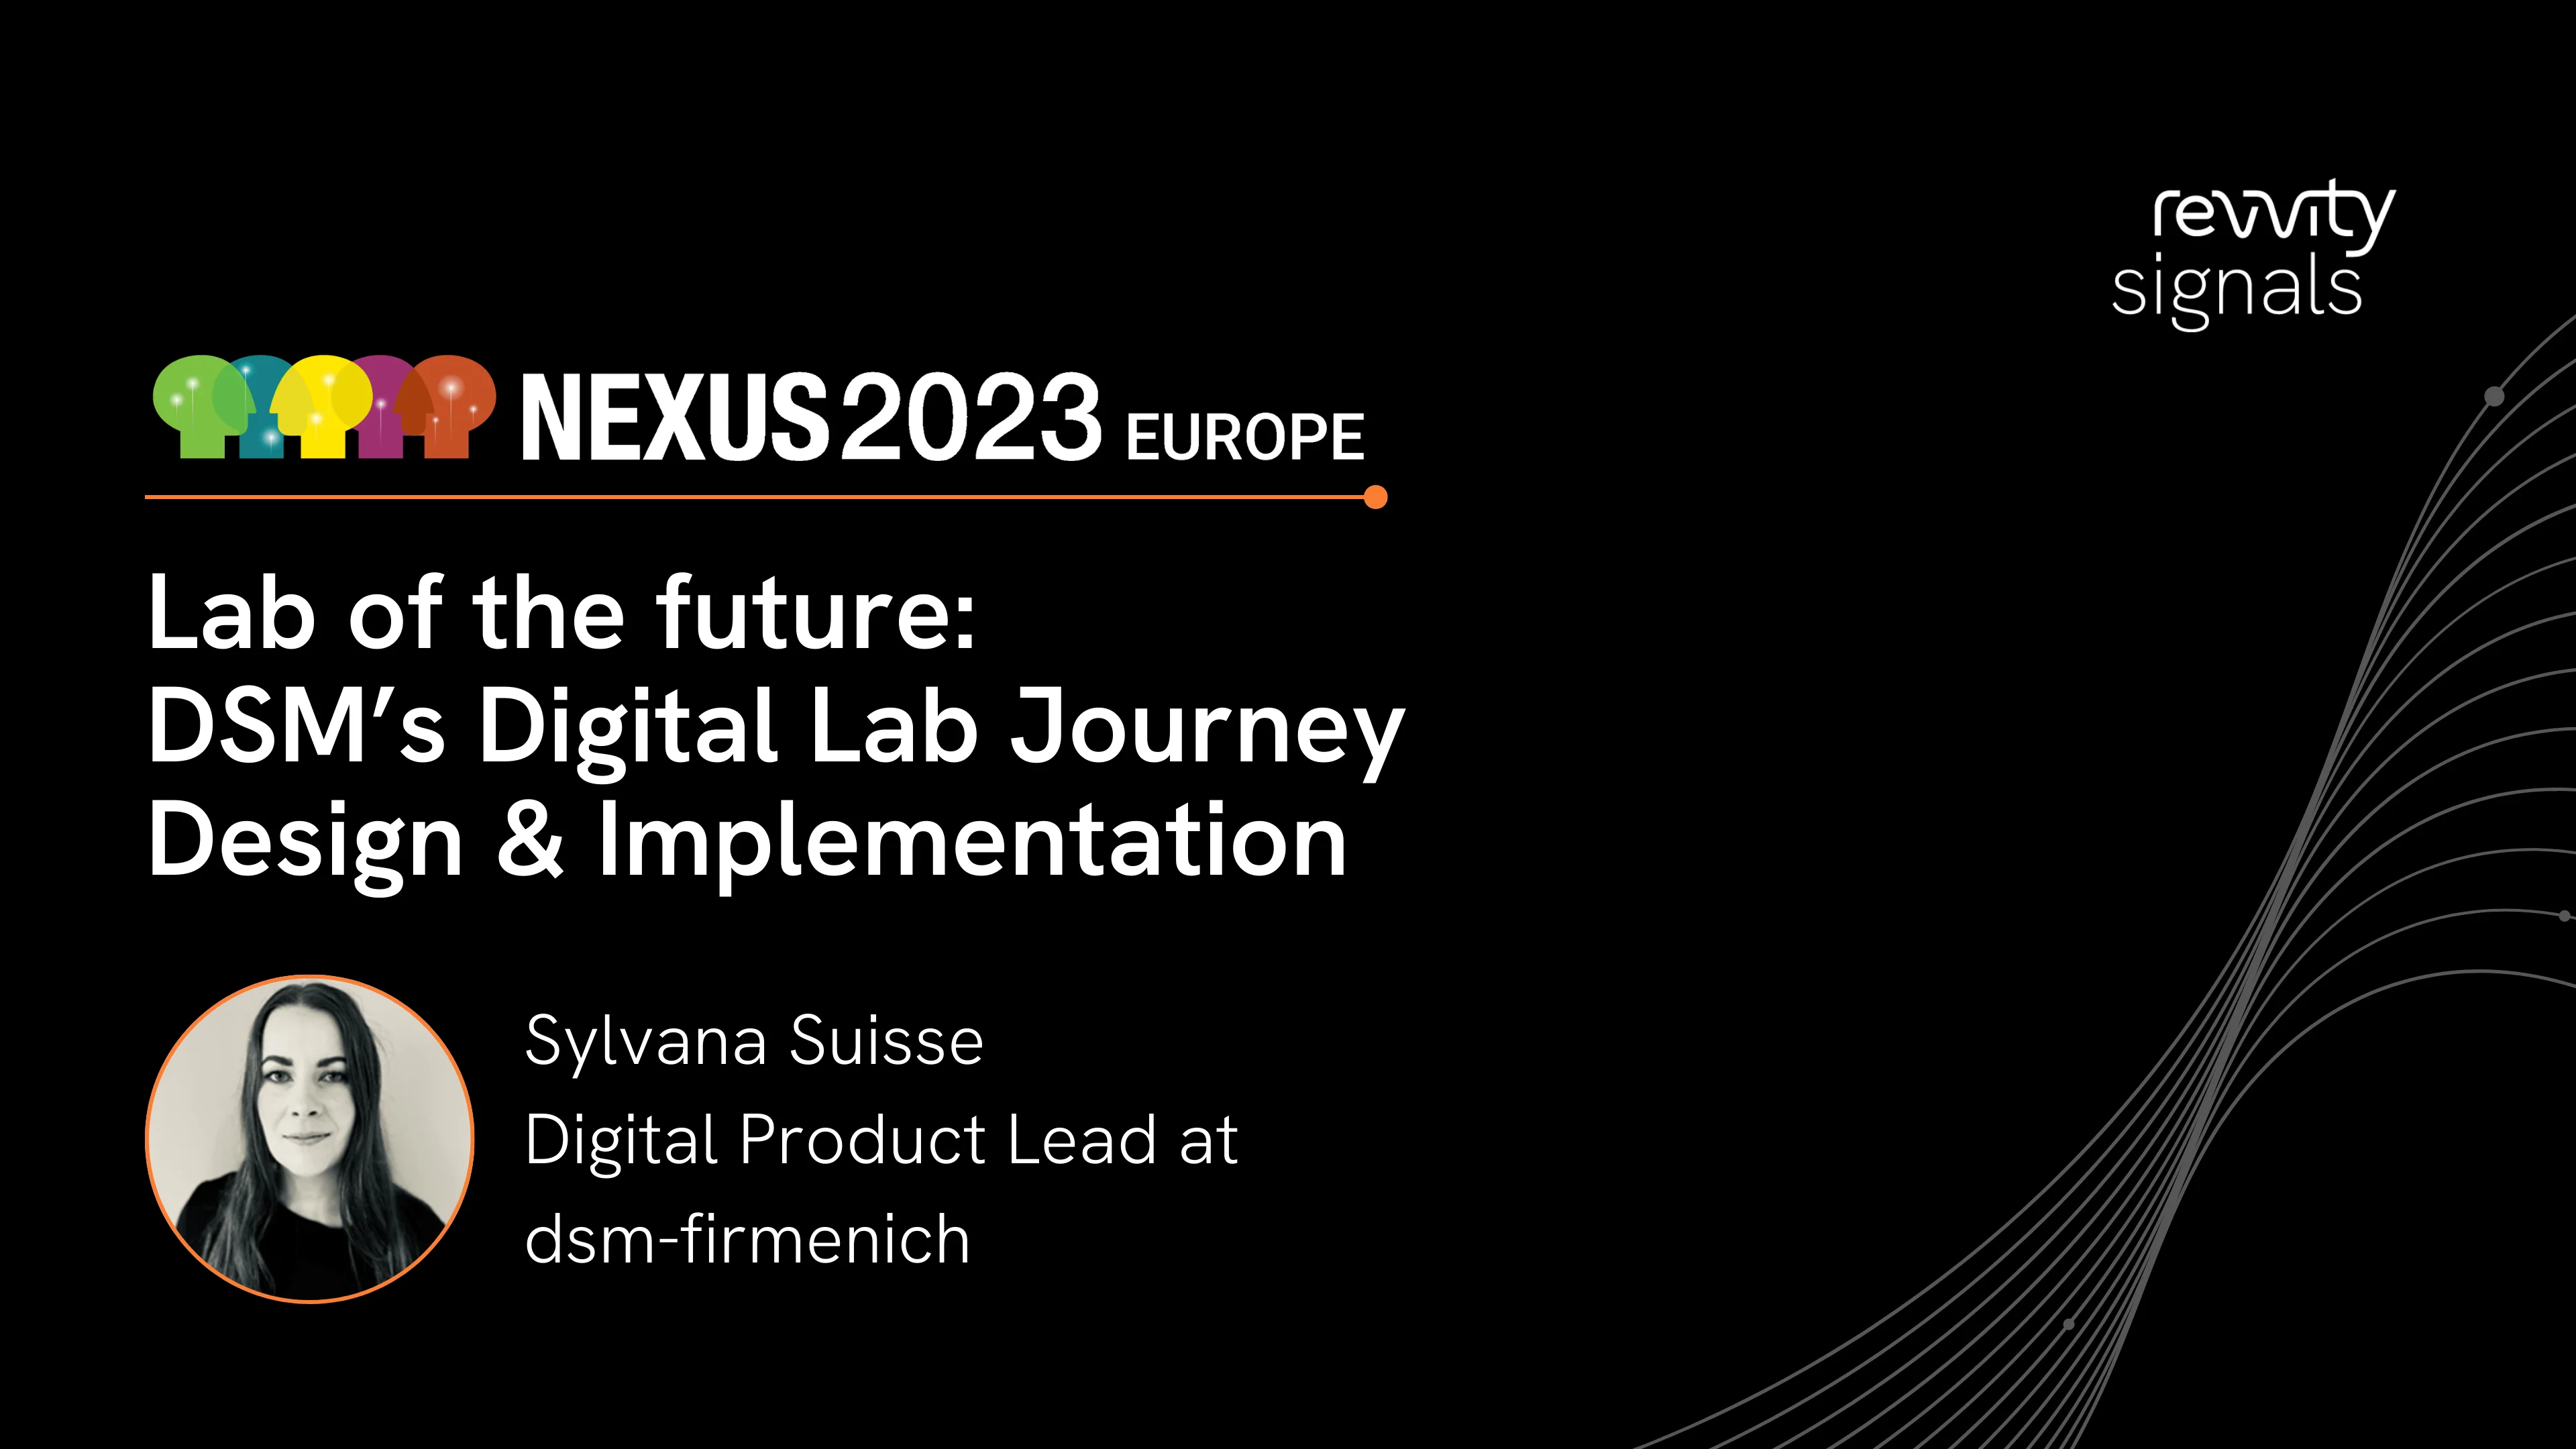 Watch Day 1, EU NEXUS 2023 - Lab of the Future: DSM'S Digital Lab Journey Design & Implementation on Vimeo.